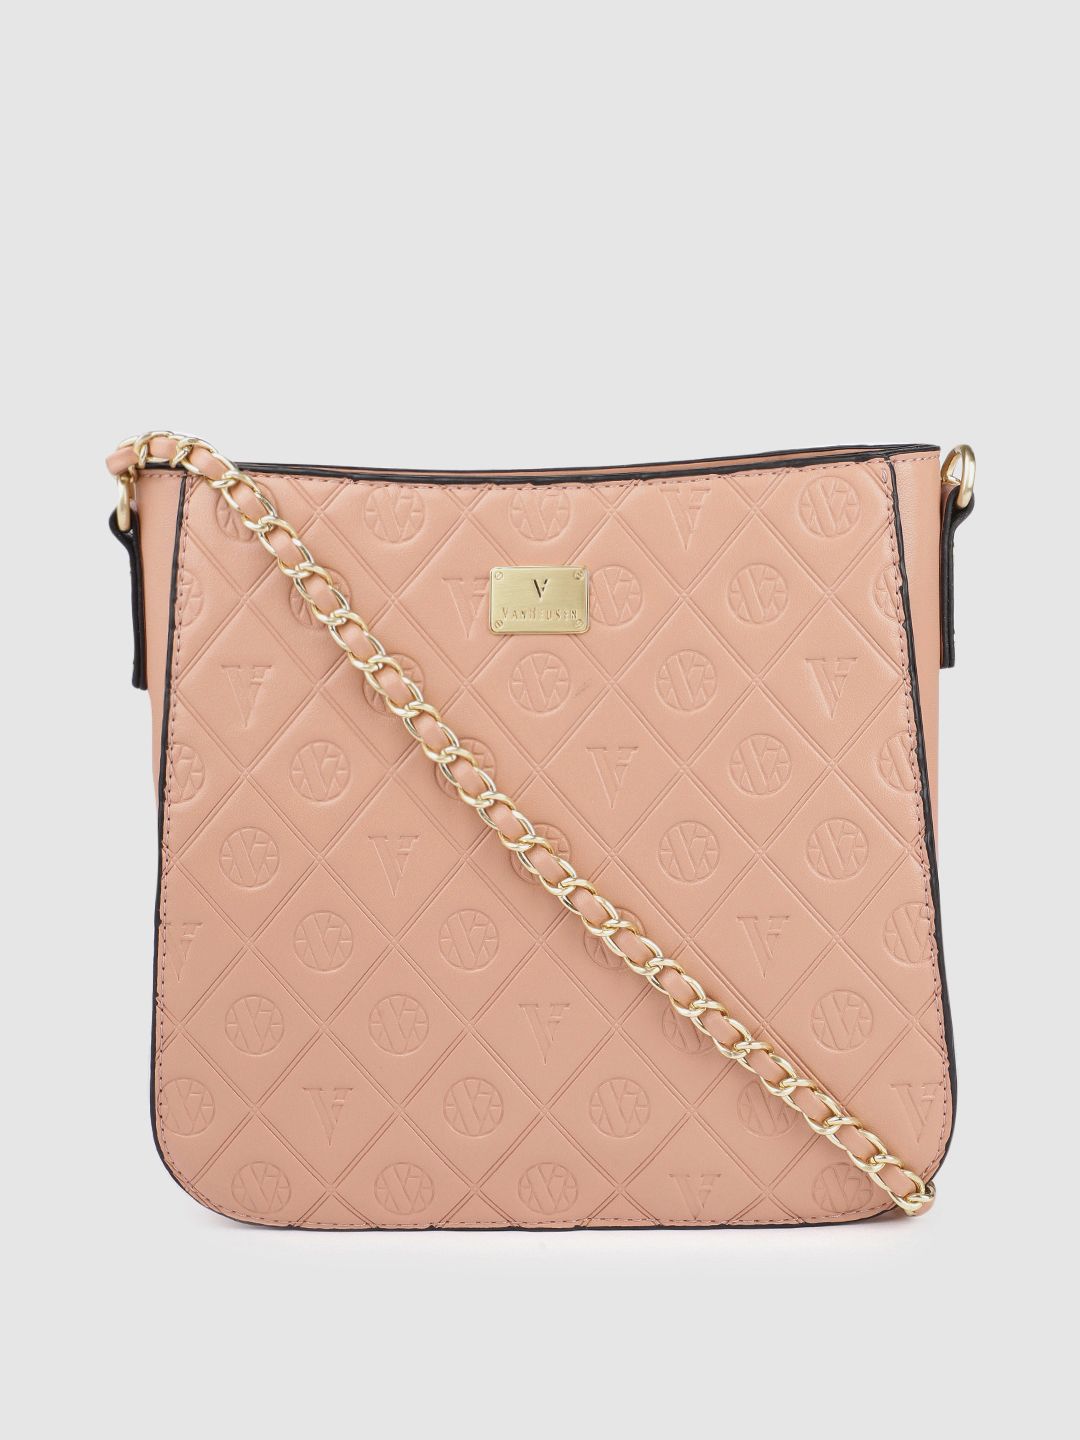 Van Heusen Pink Textured Sling Bag Price in India